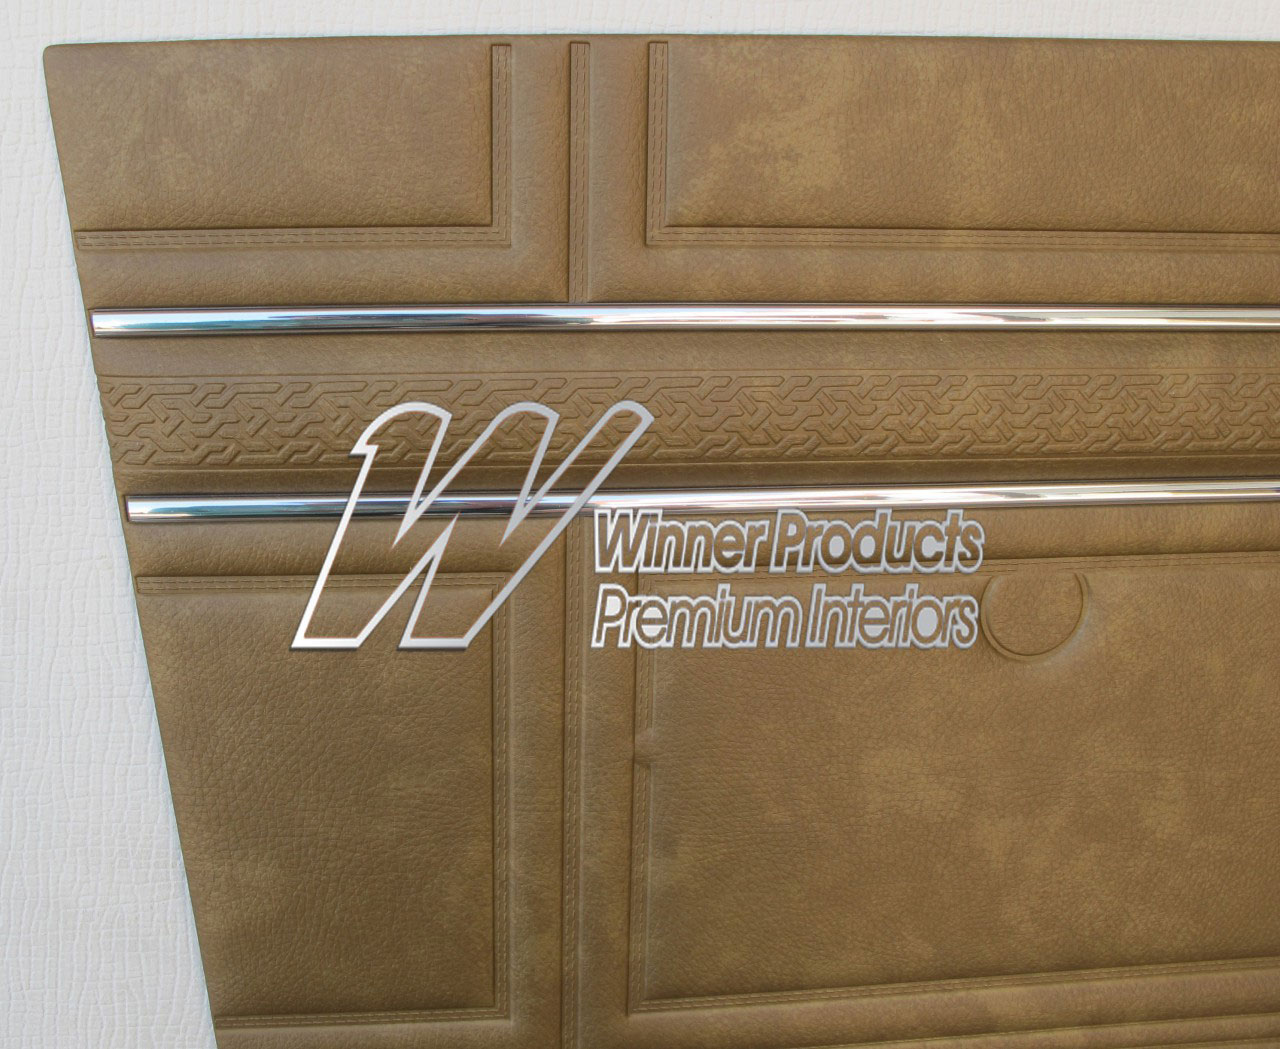 Holden Kingswood HT Kingswood Panel Van 11G Antique Gold & Castillion Weave Door Trims (Image 3 of 3)